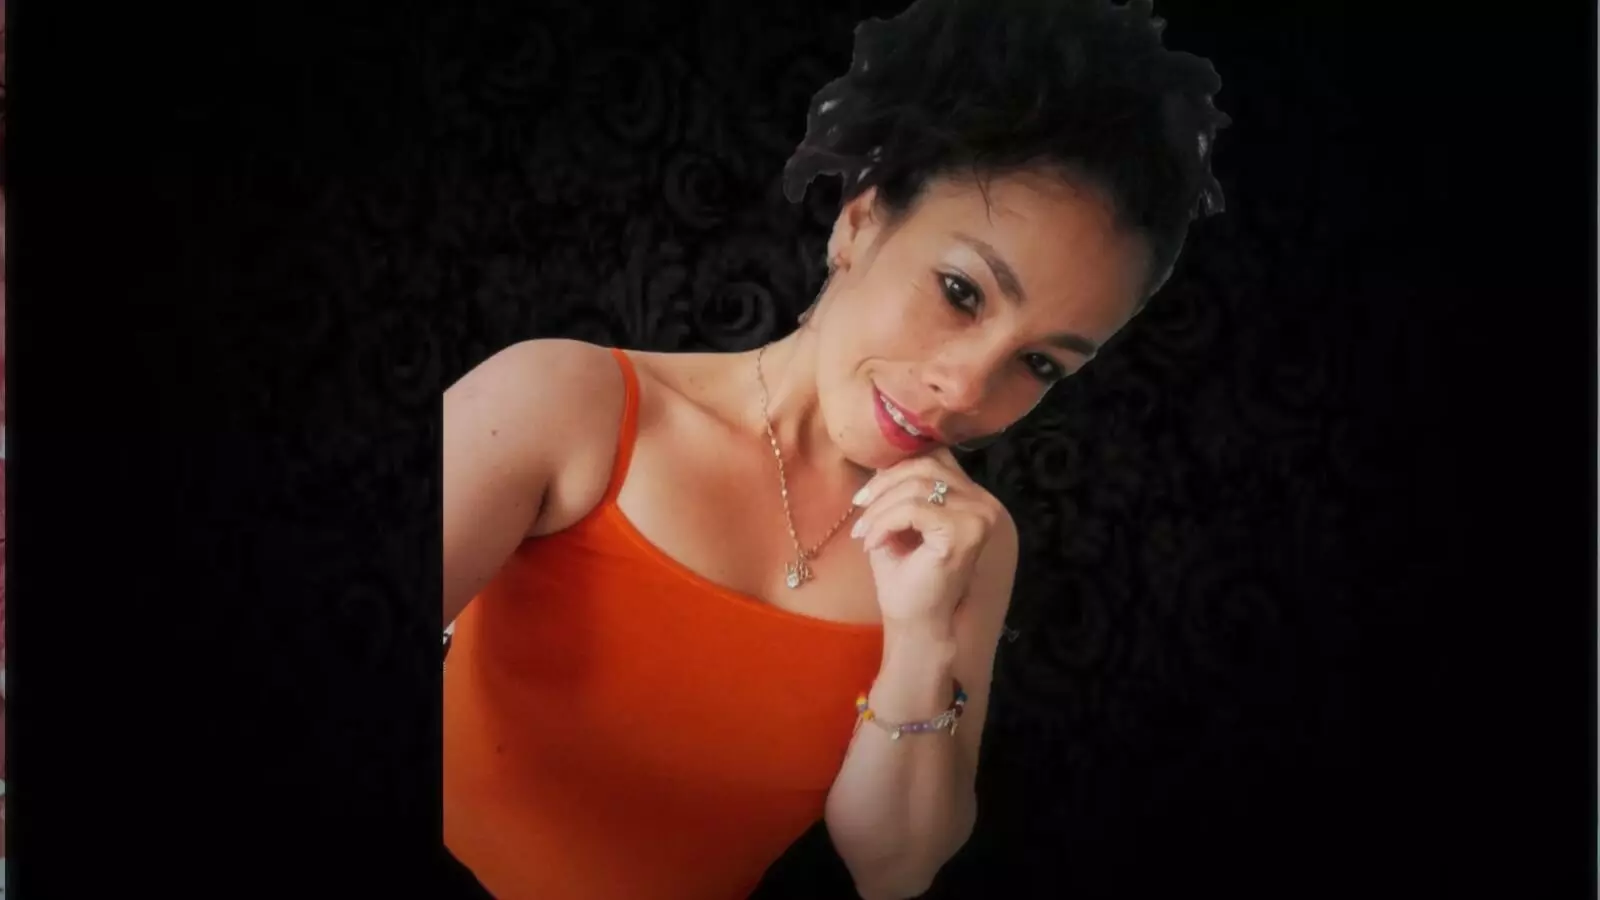  RELATED VIDEOS - WEBCAM FernandaZuleta STRIPS AND MASTURBATES